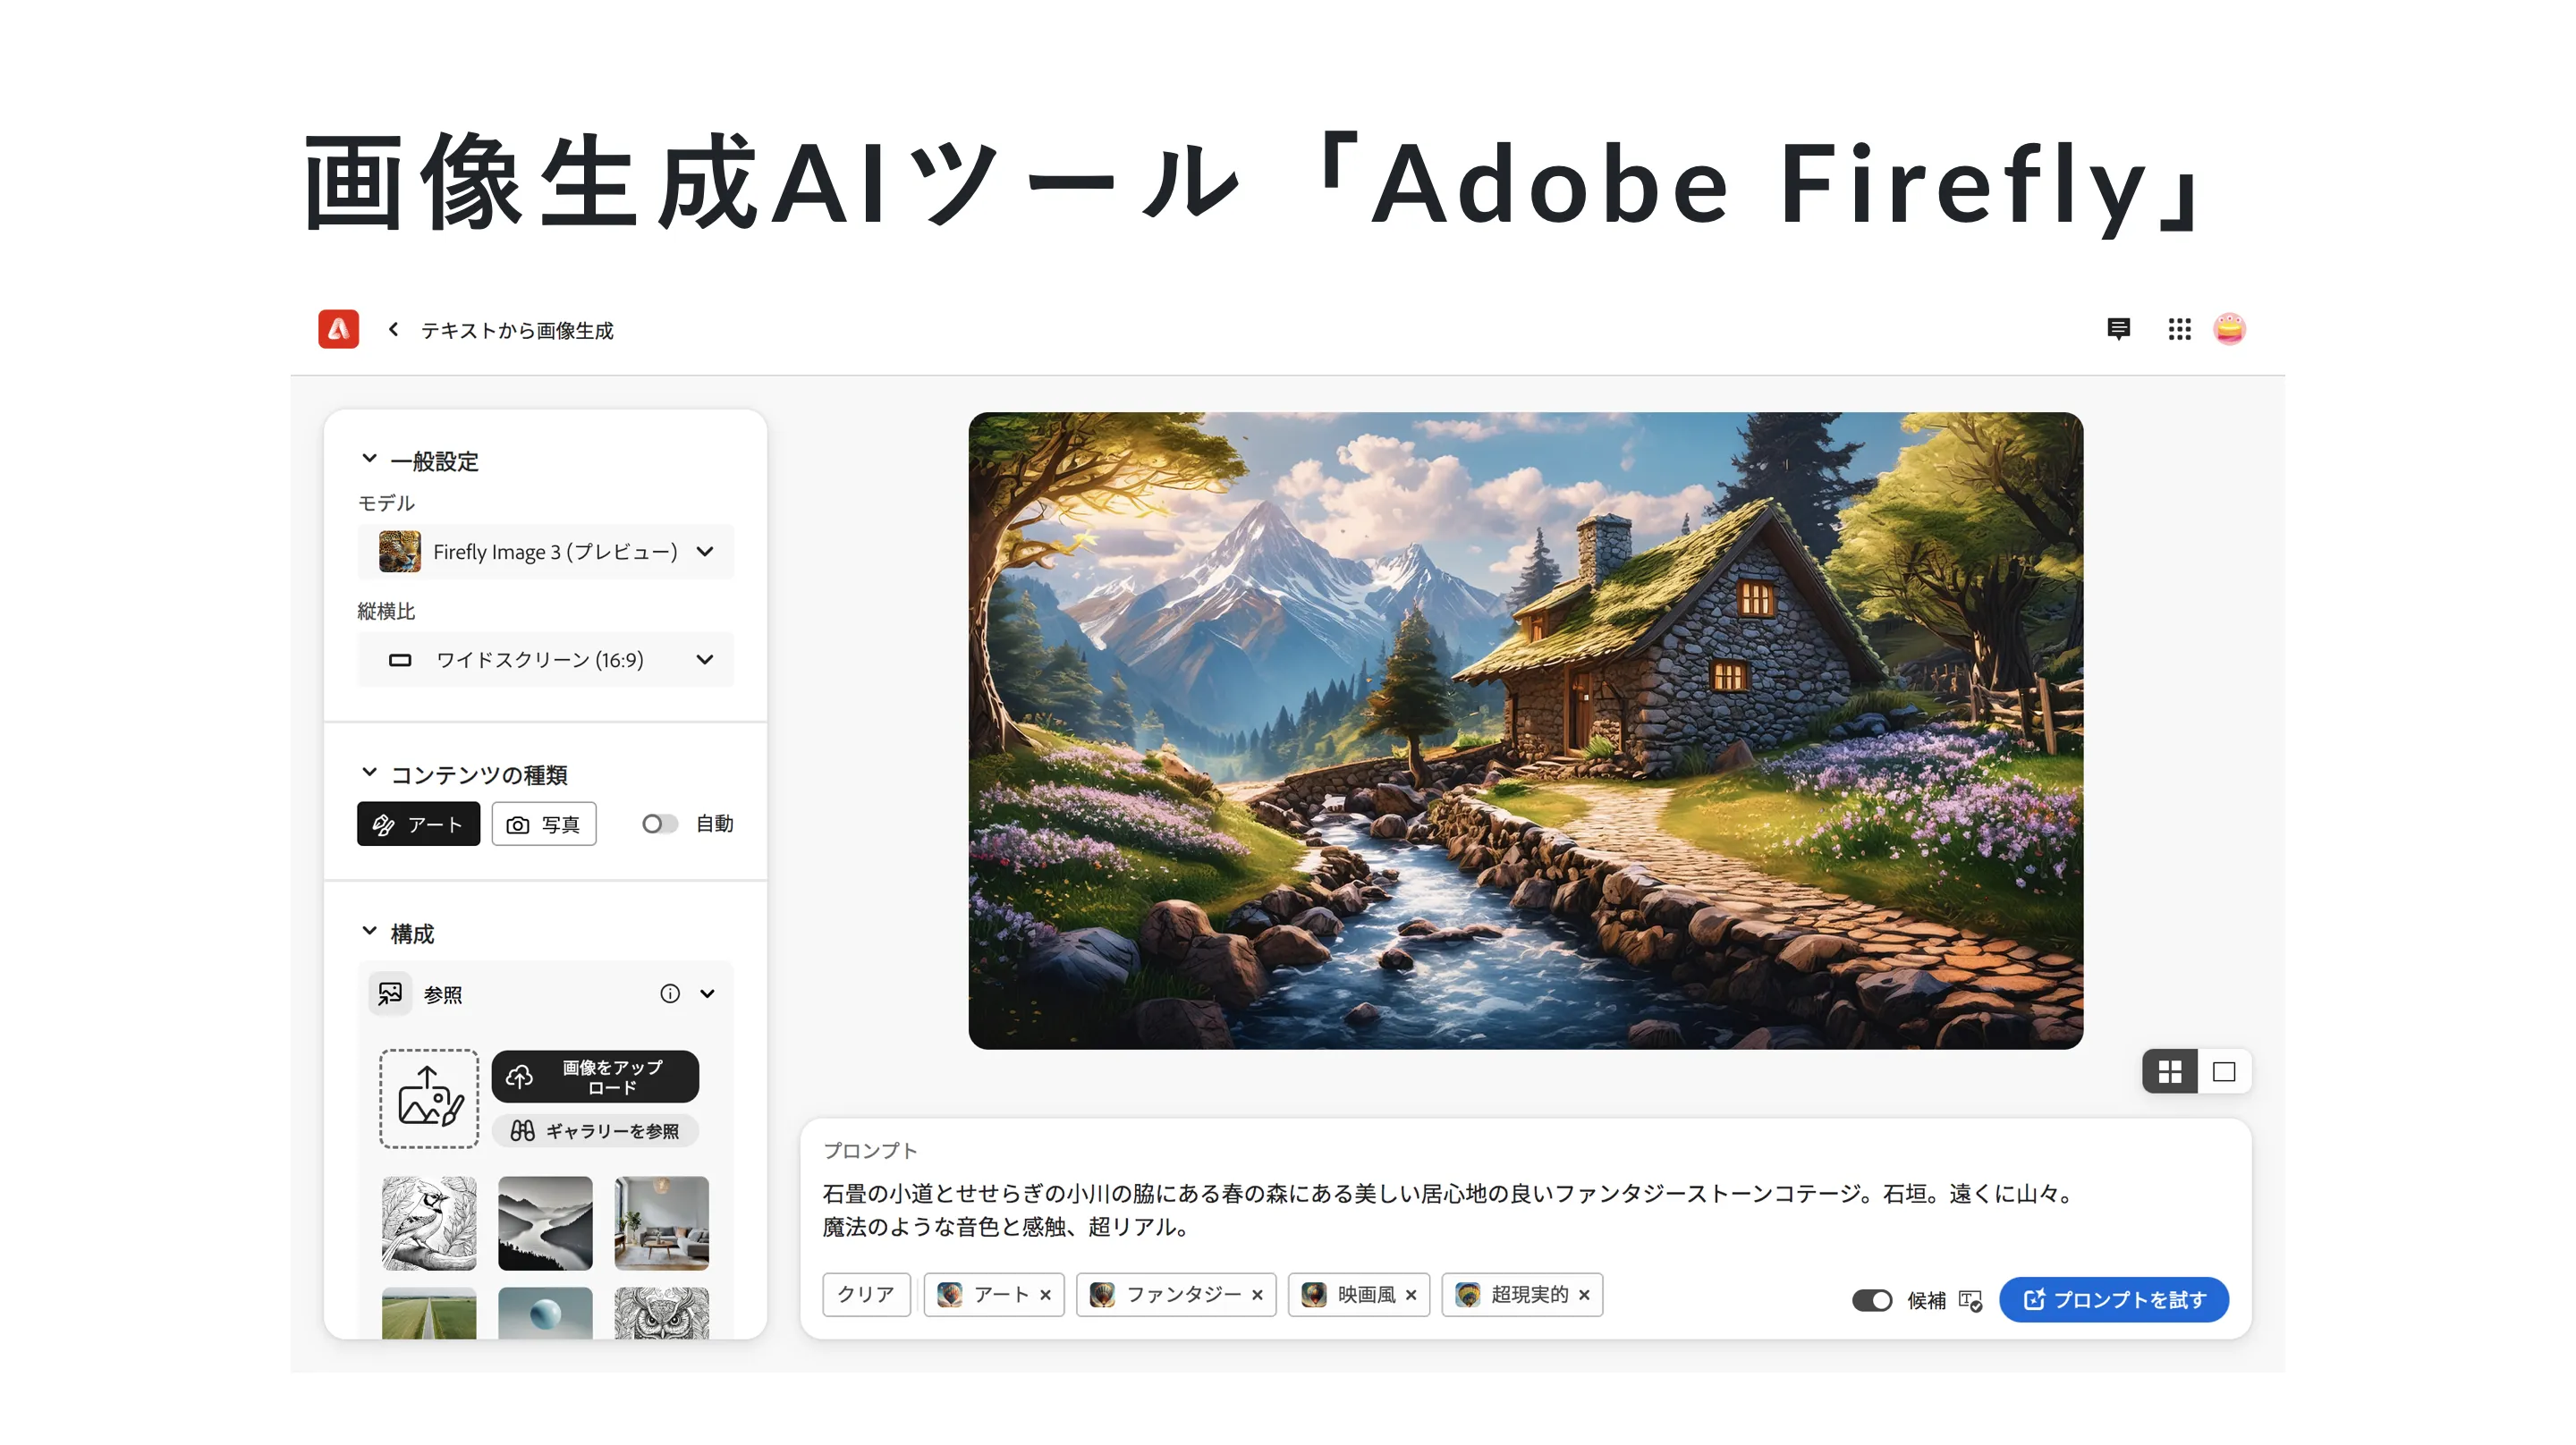 Adobe Firely.1